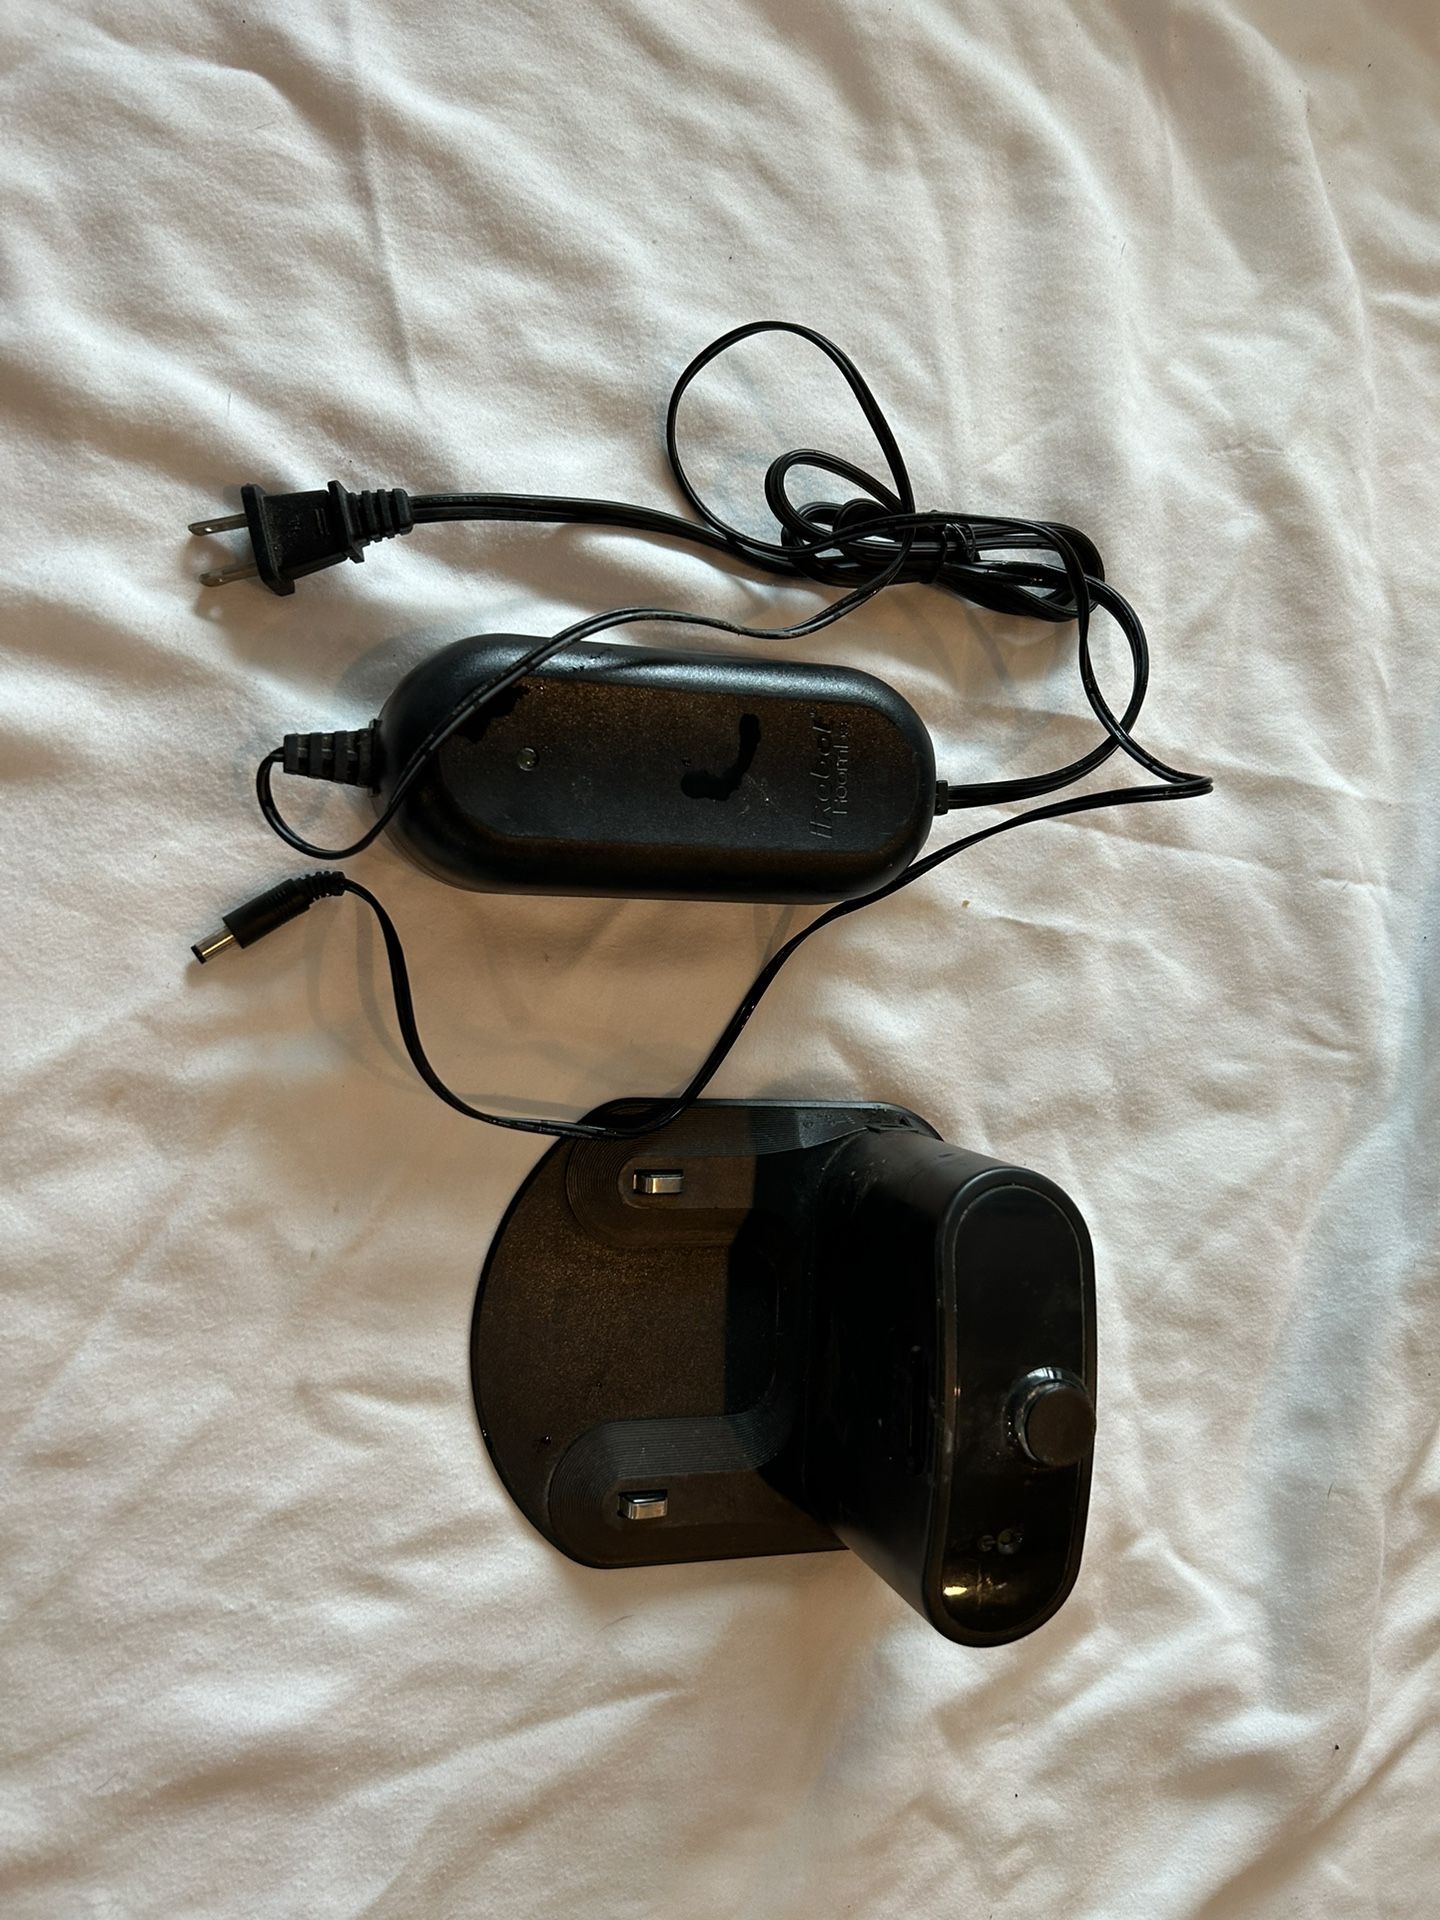 Roomba iRobot charging port